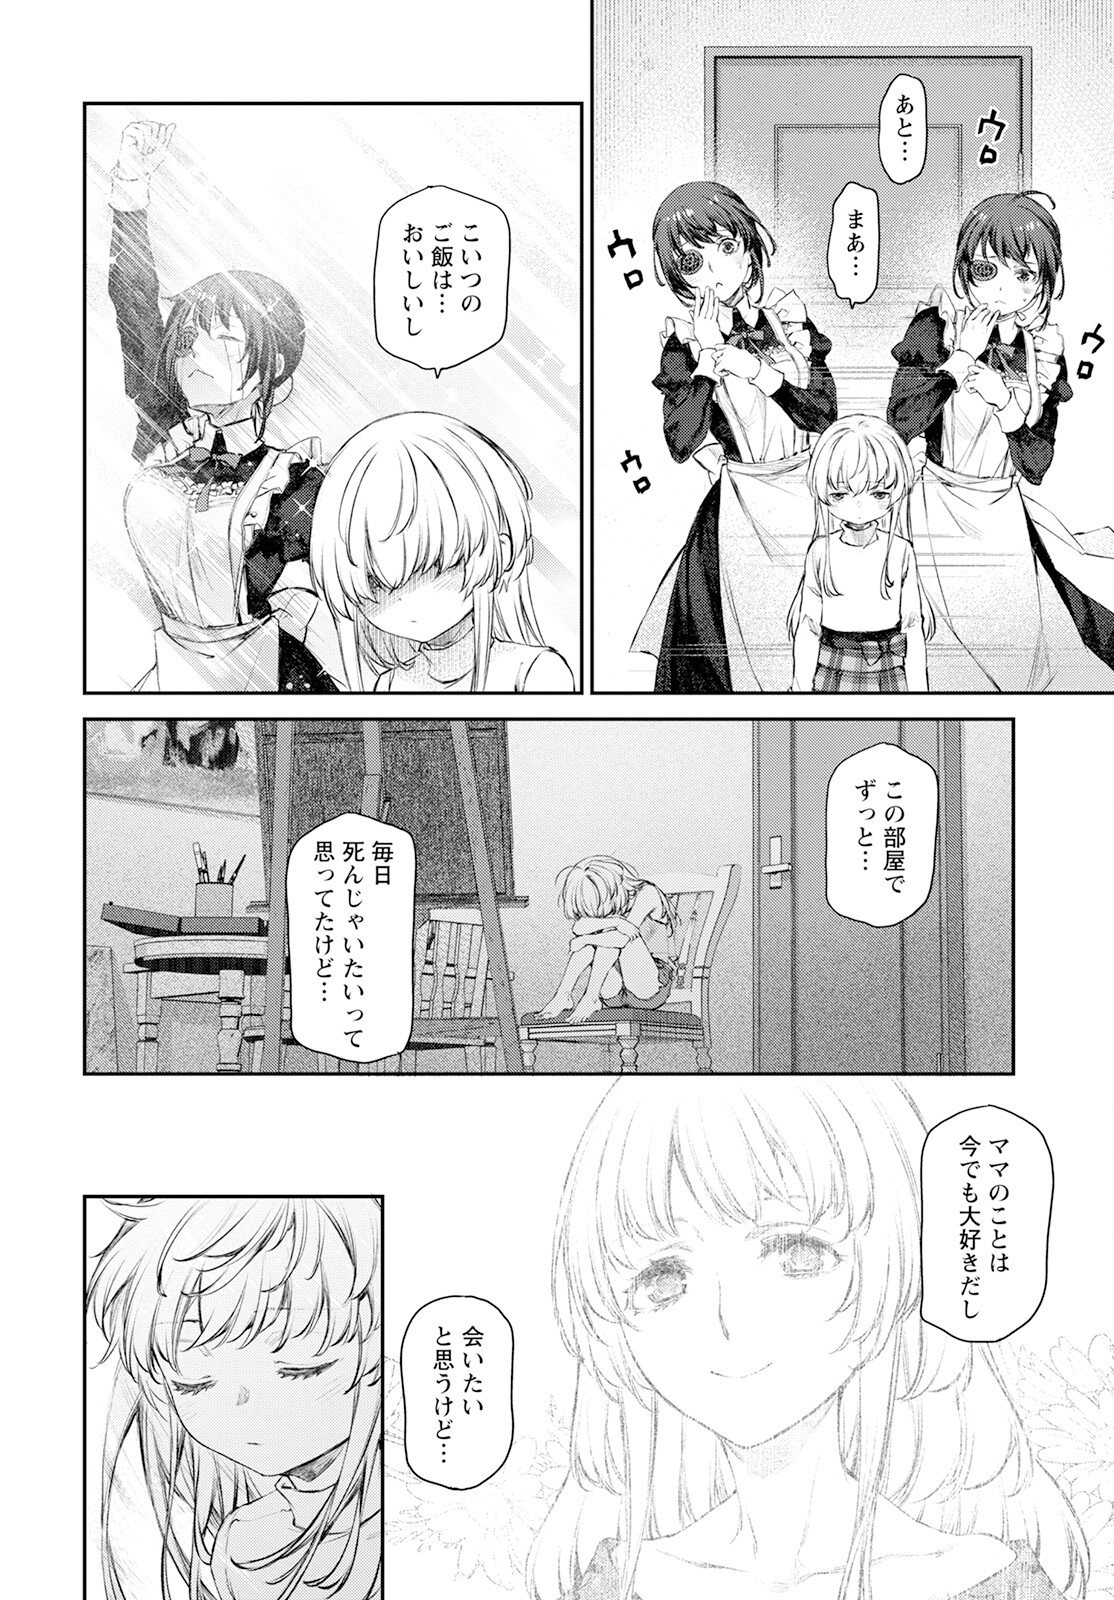 Uchi no Maid ga Uzasugiru! - Chapter 58 - Page 10